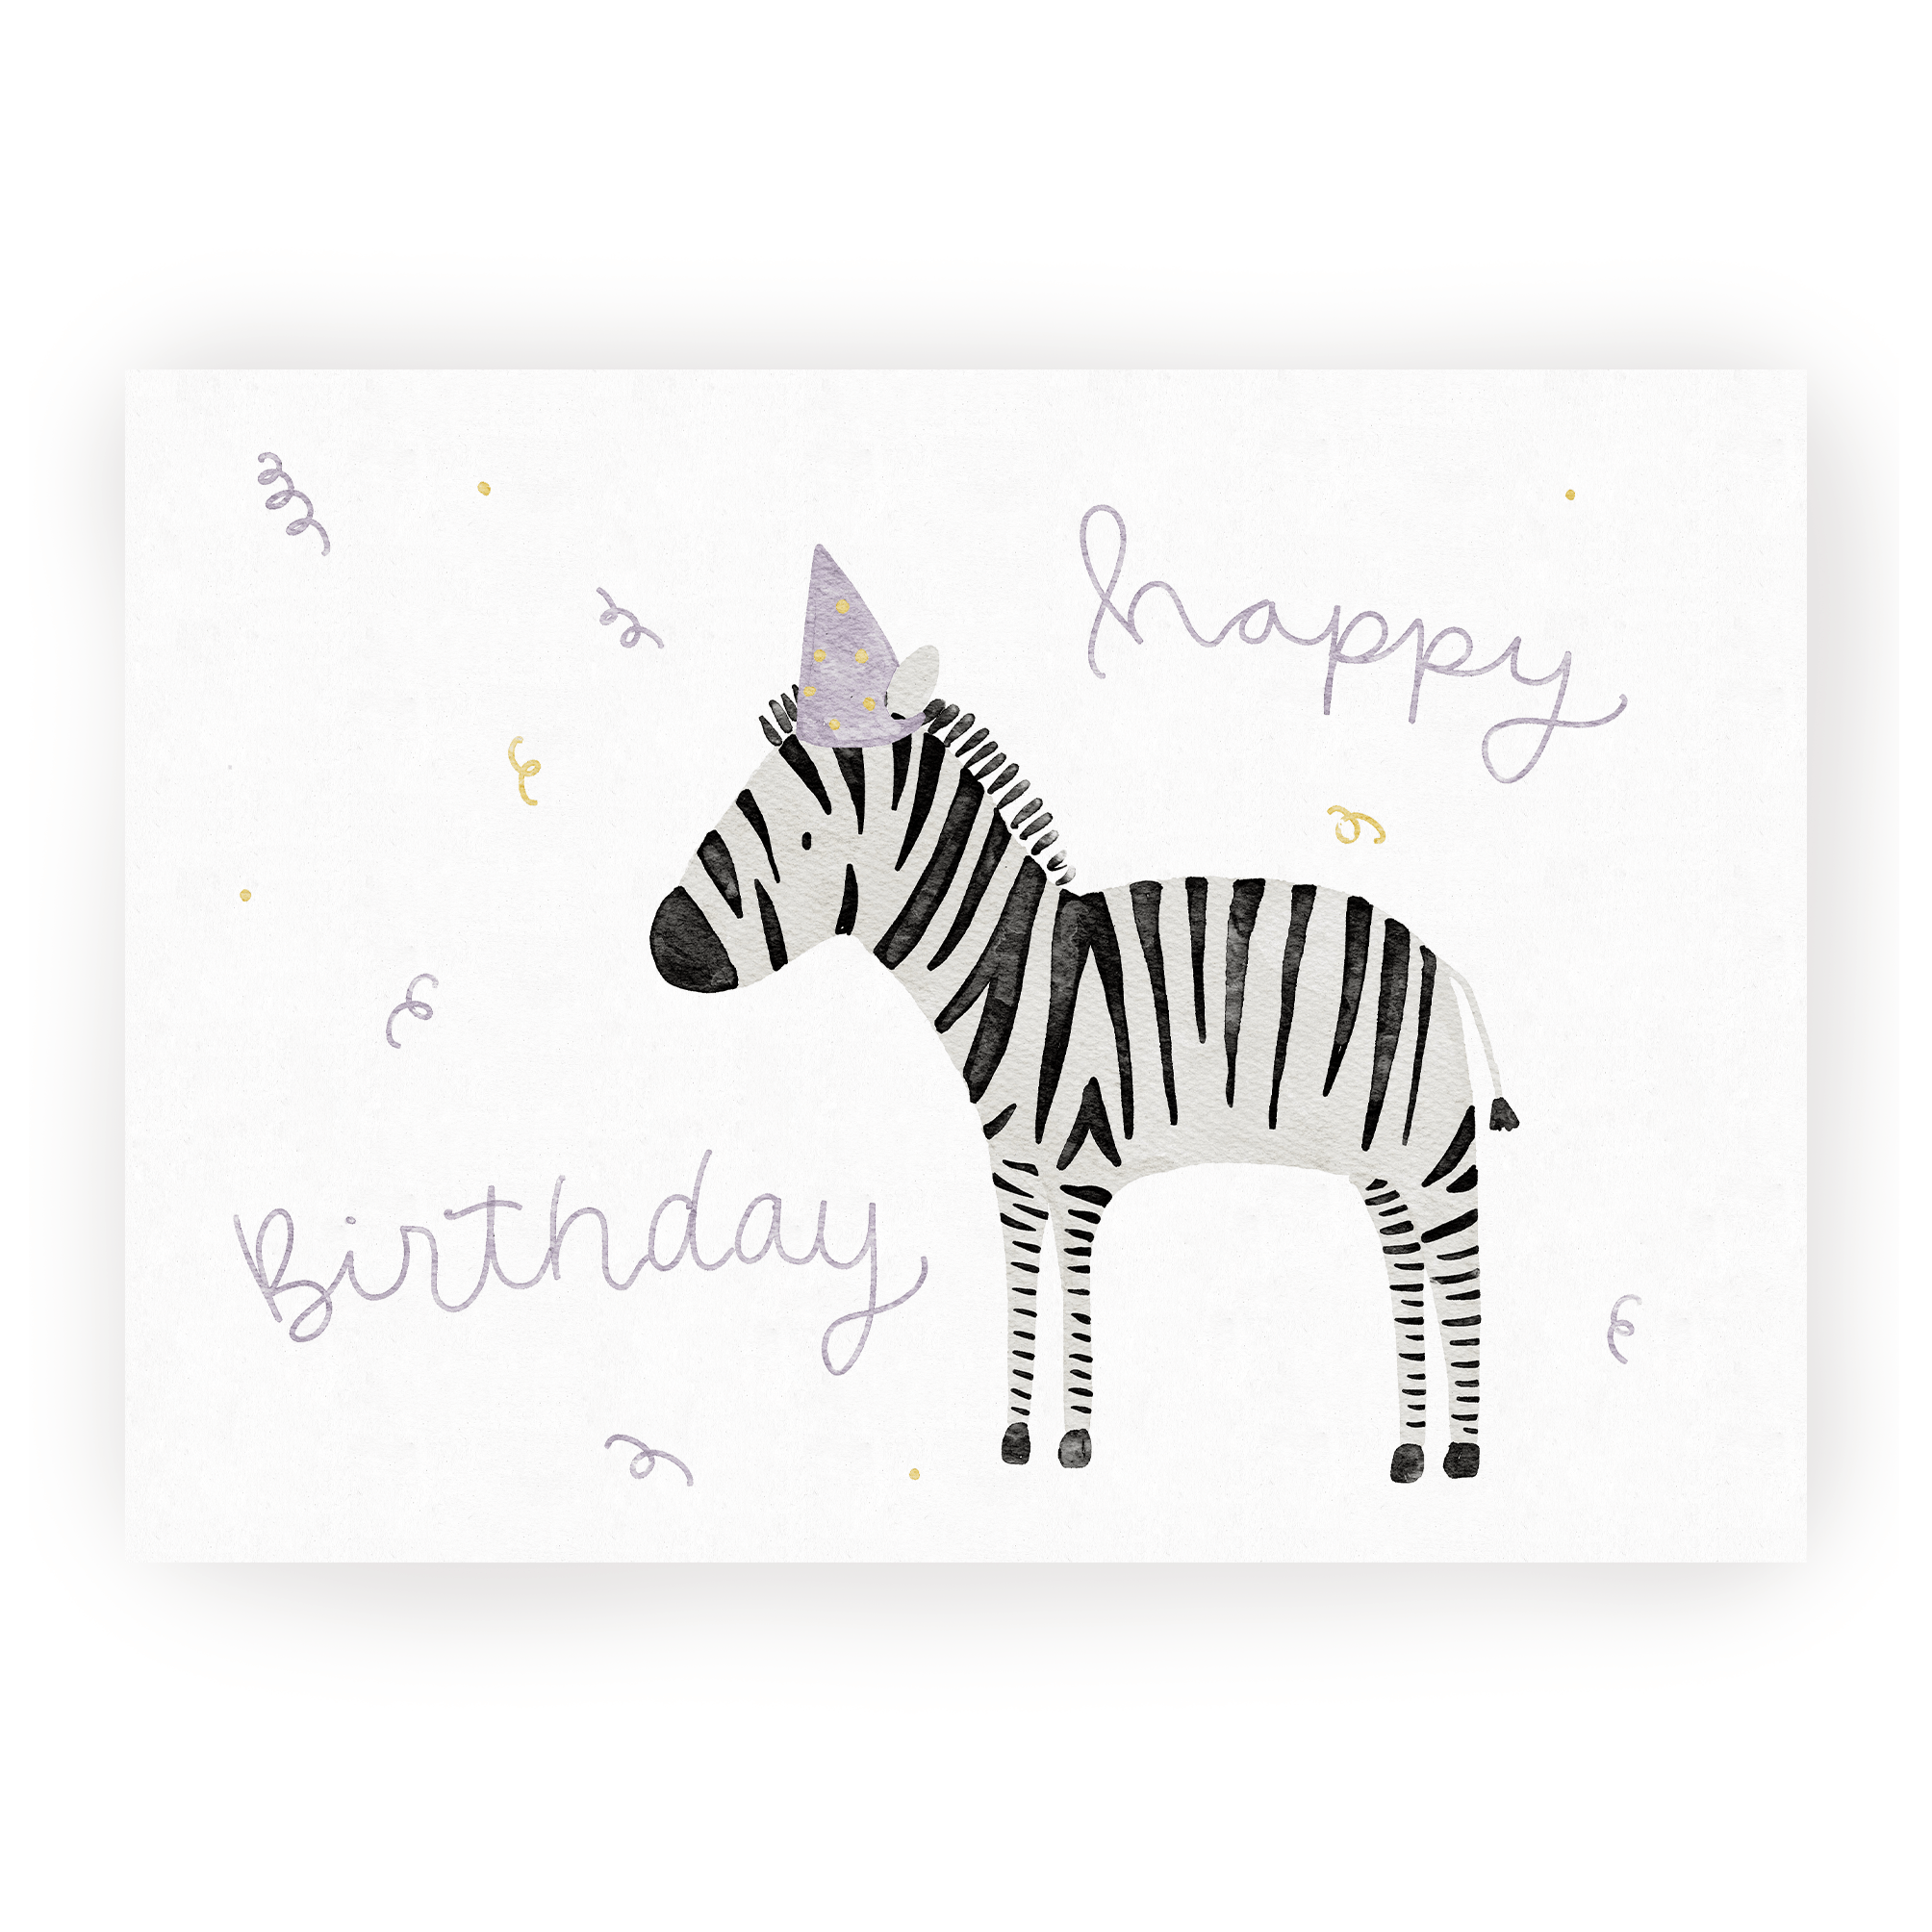 Postkarte Geburtstag Safaritiere